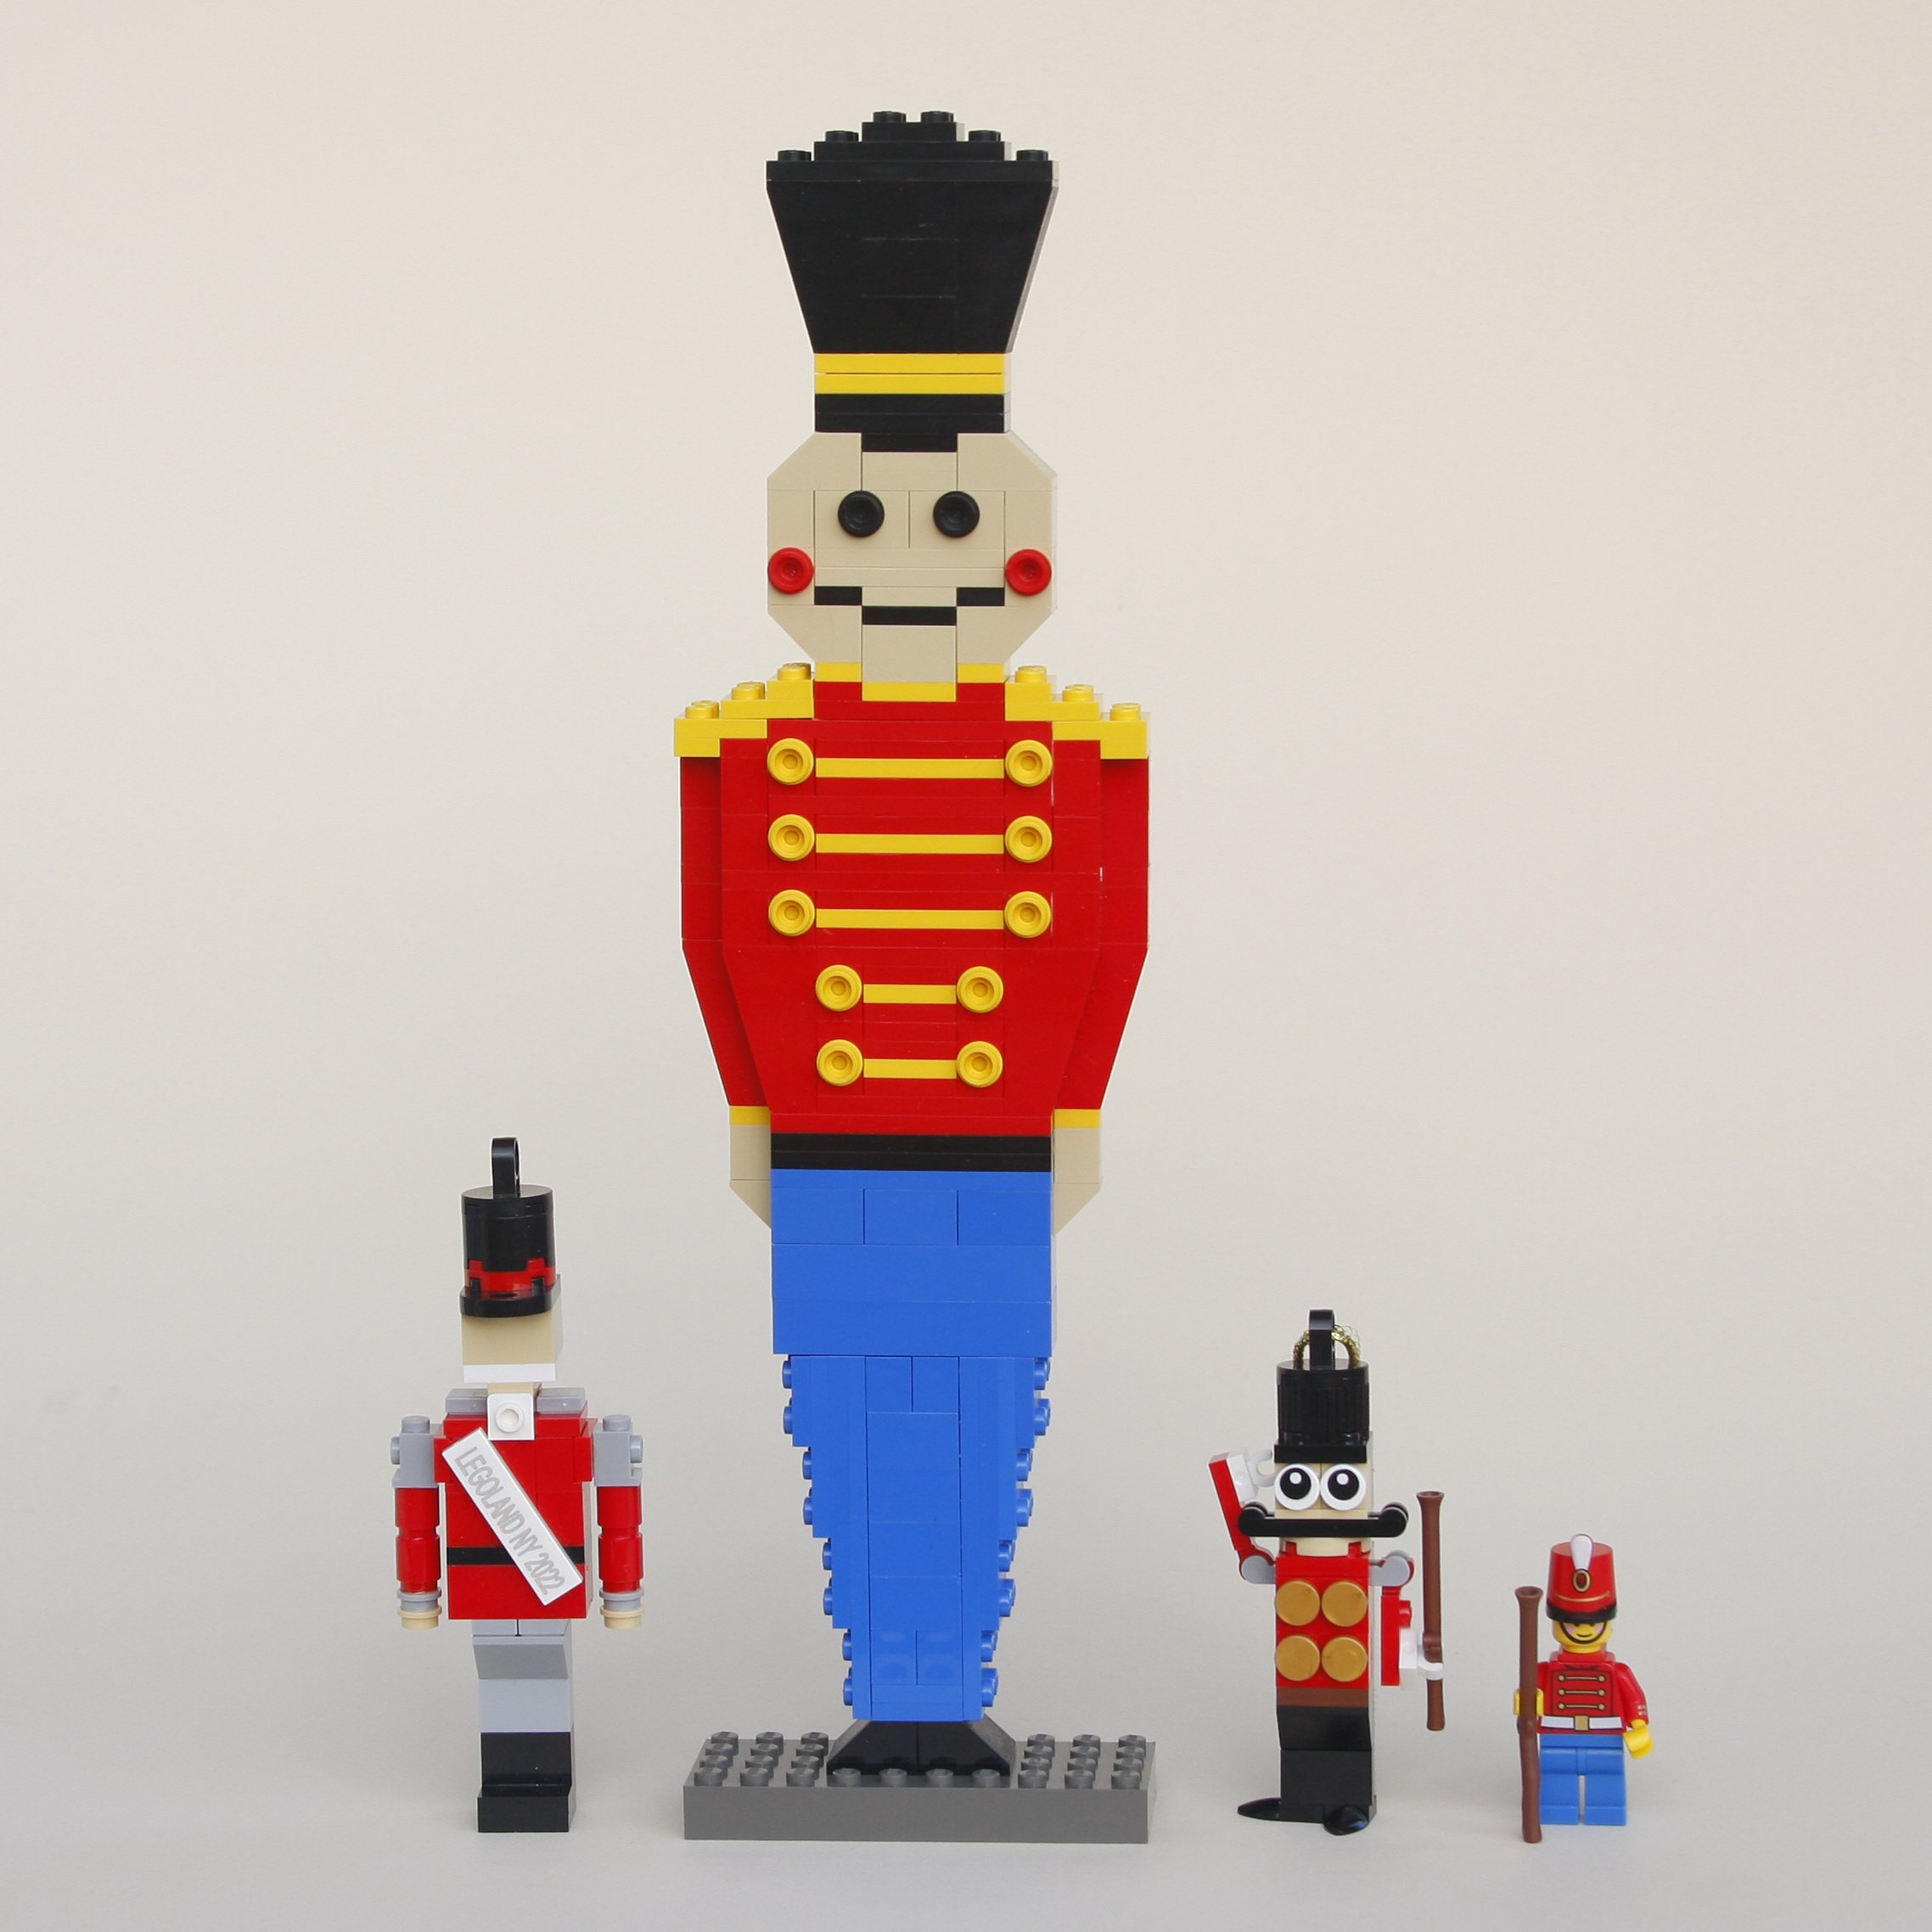 Toy Soldier - LEGO Seasonal set 5004420